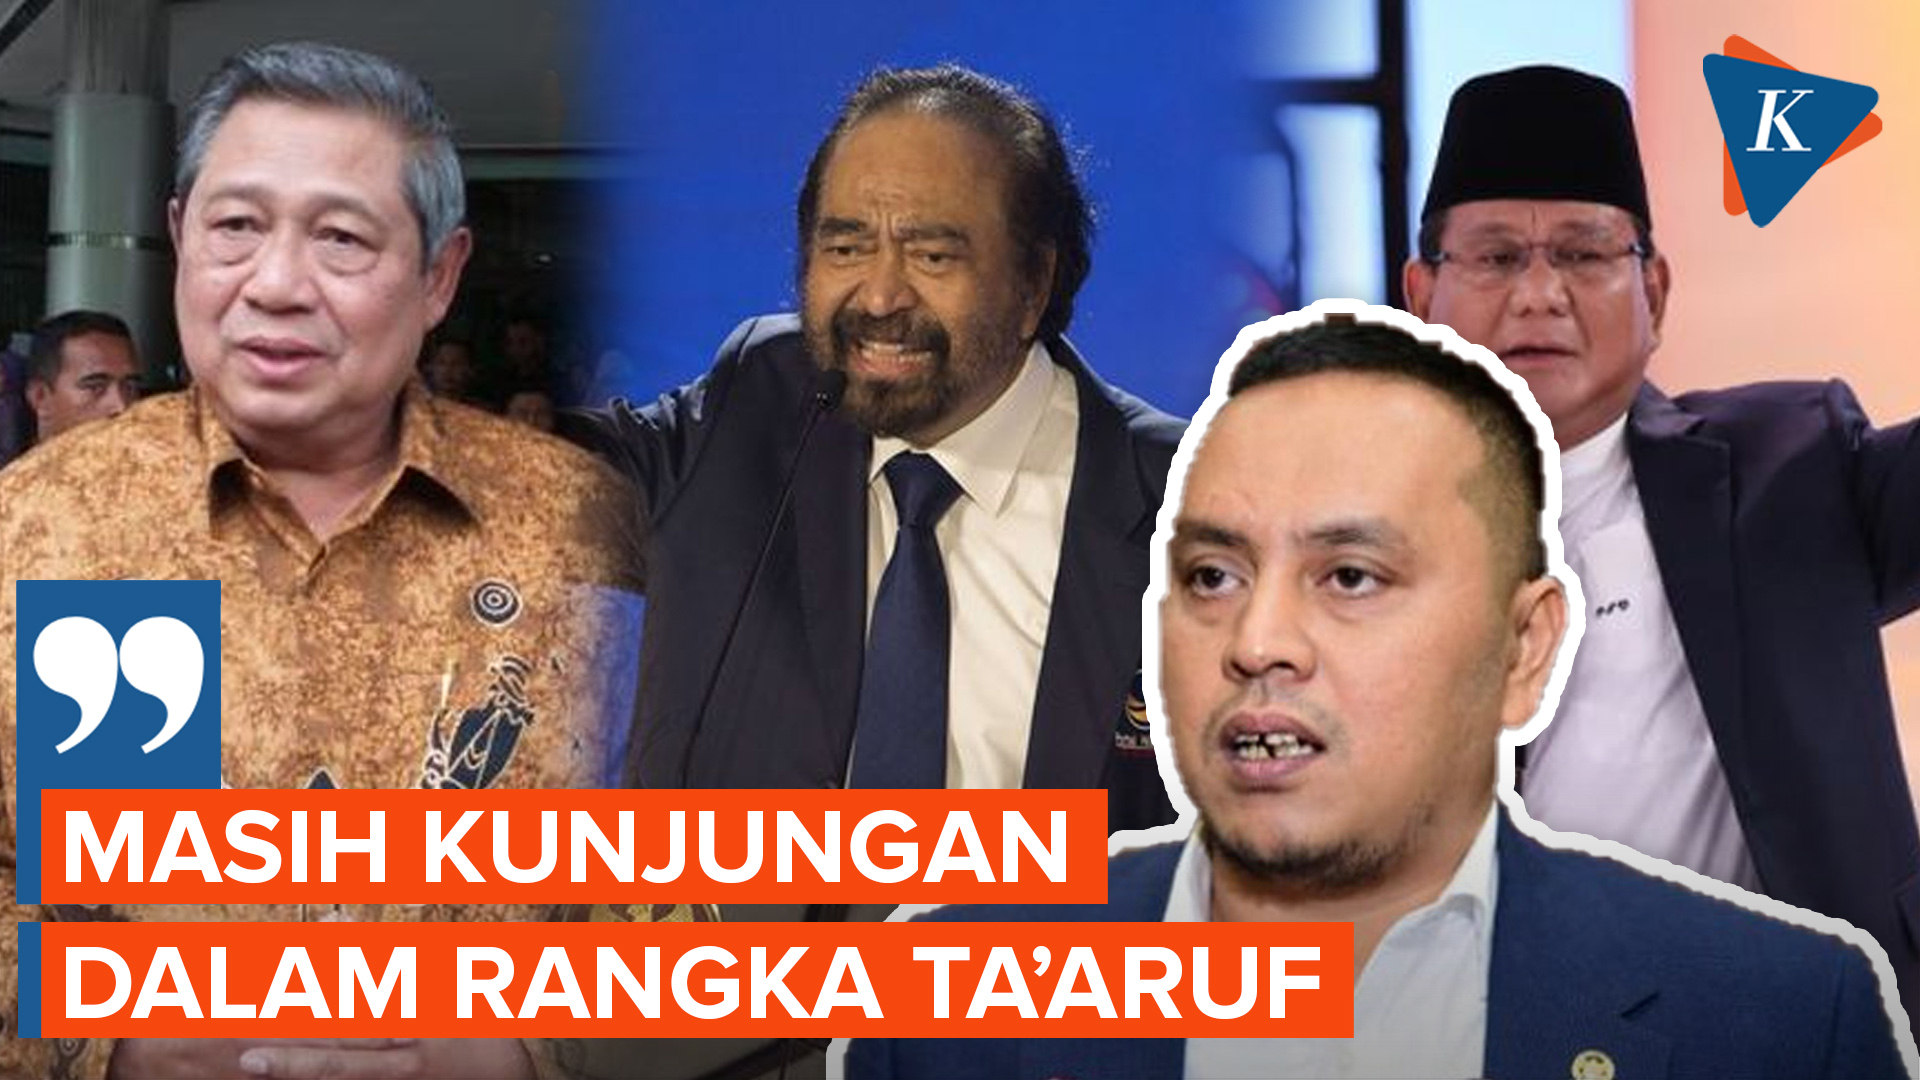 Nasdem Sebut SBY-Prabowo Temui Paloh dalam Rangka Taaruf dan Wisata Politik